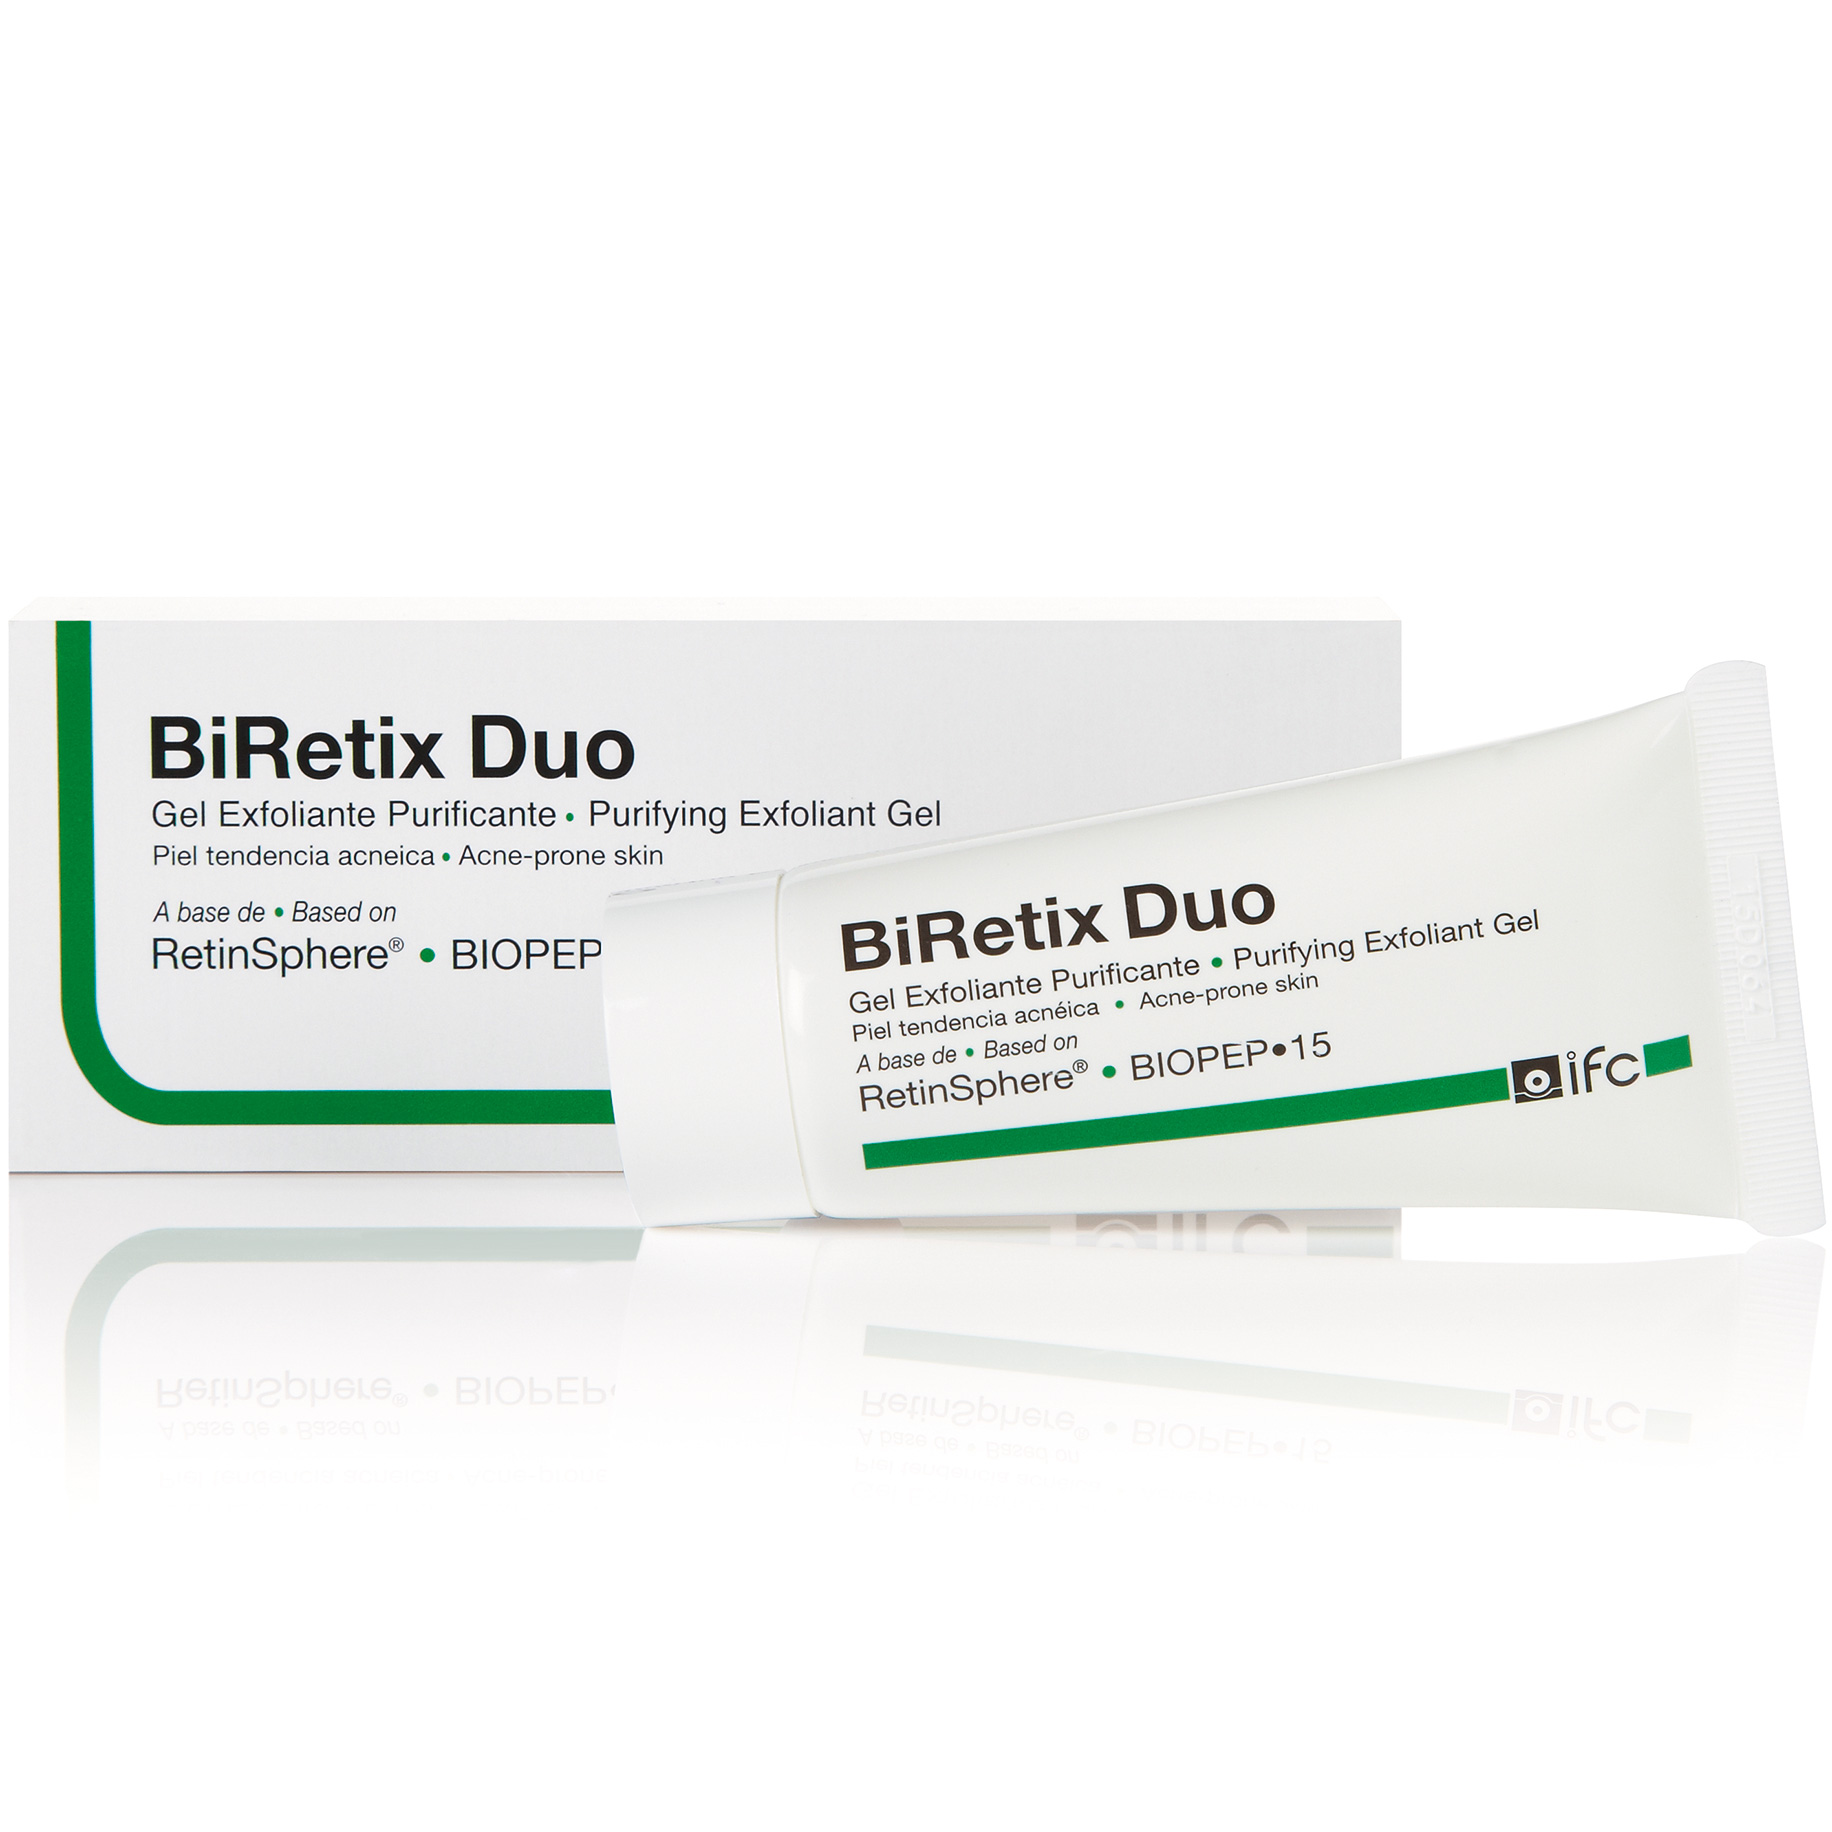 Duo gel. BIRETIX Duo. BIRETIX Duo Purifying Exfoliant Gel Anti-Blemish Gel Cantabria Labs себорегулирующий гель, 30 мл.. Муфлексин дуо гель. BIRETIX система.